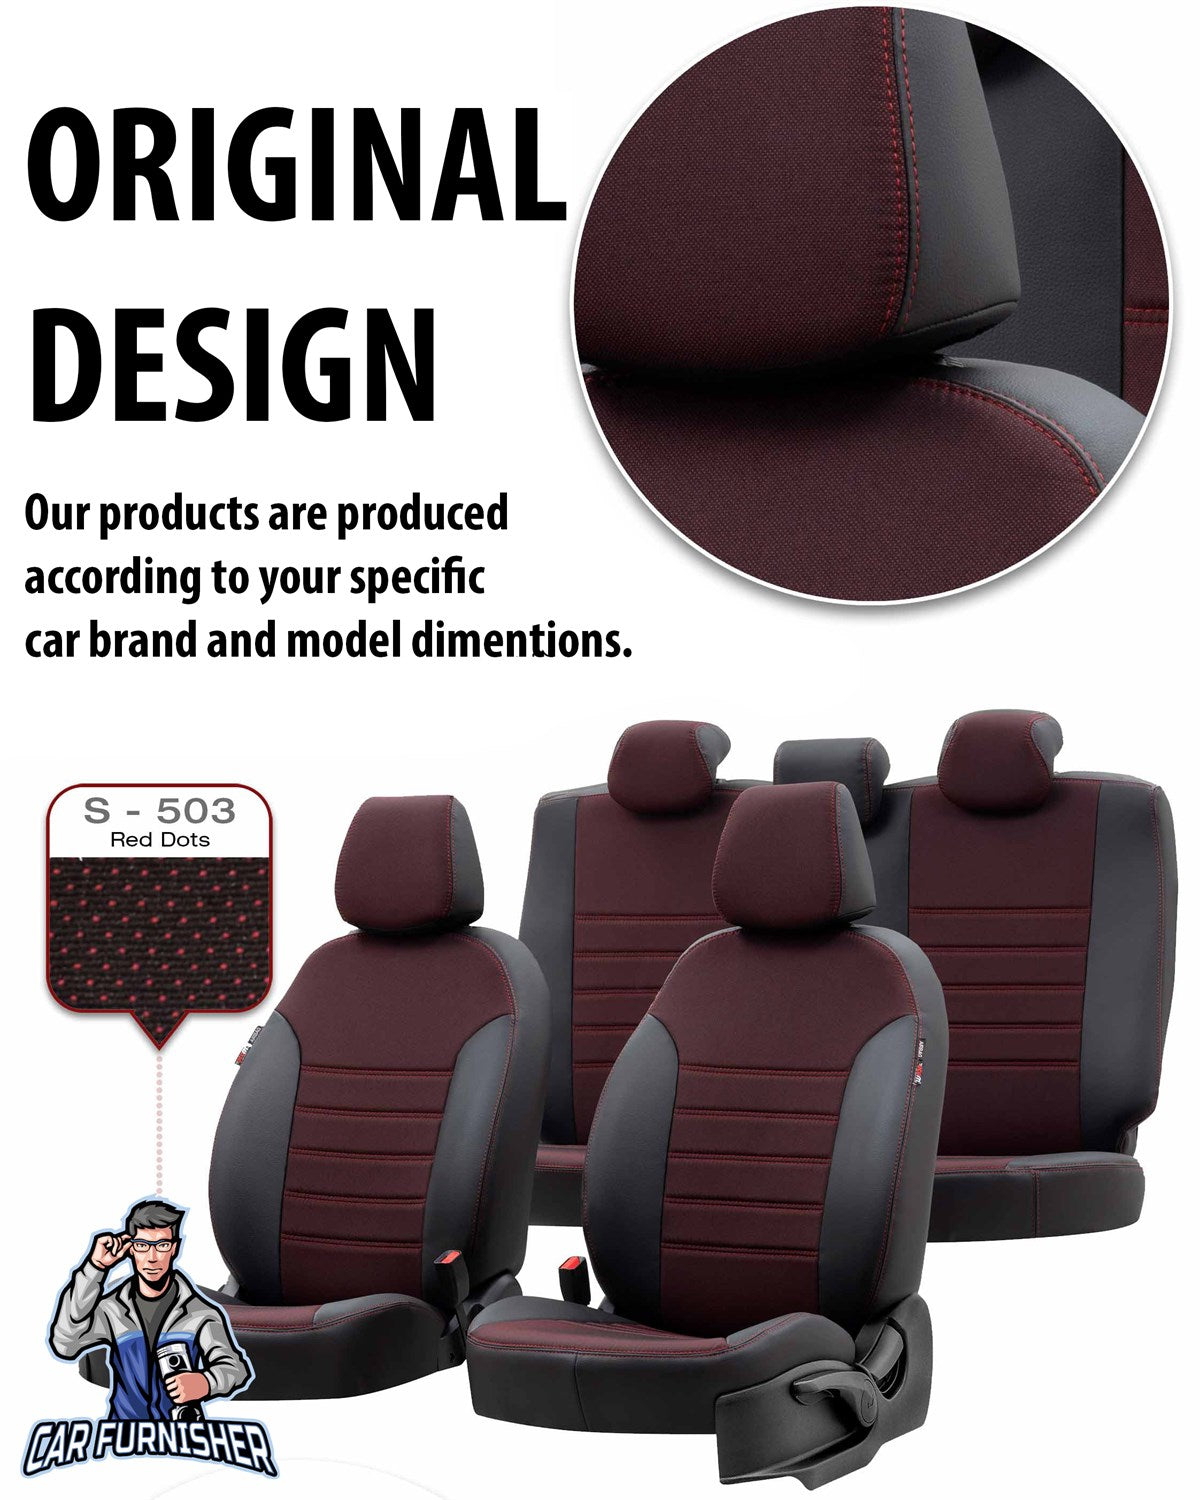 Toyota Land Cruiser Seat Cover Paris Leather & Jacquard Design Gray Leather & Jacquard Fabric